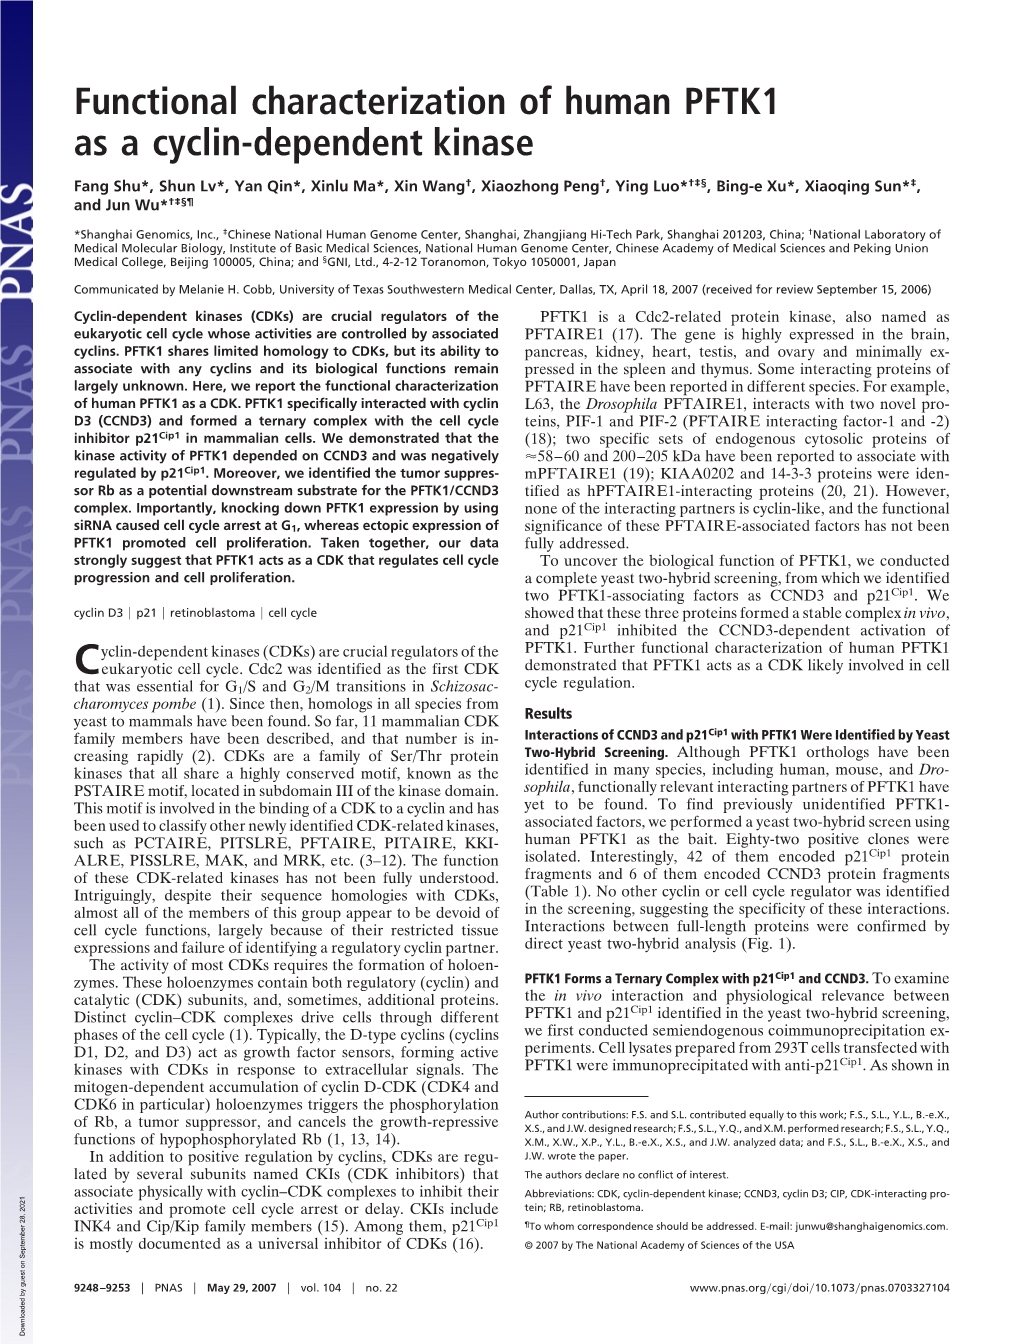 Functional Characterization of Human PFTK1 As a Cyclin-Dependent Kinase